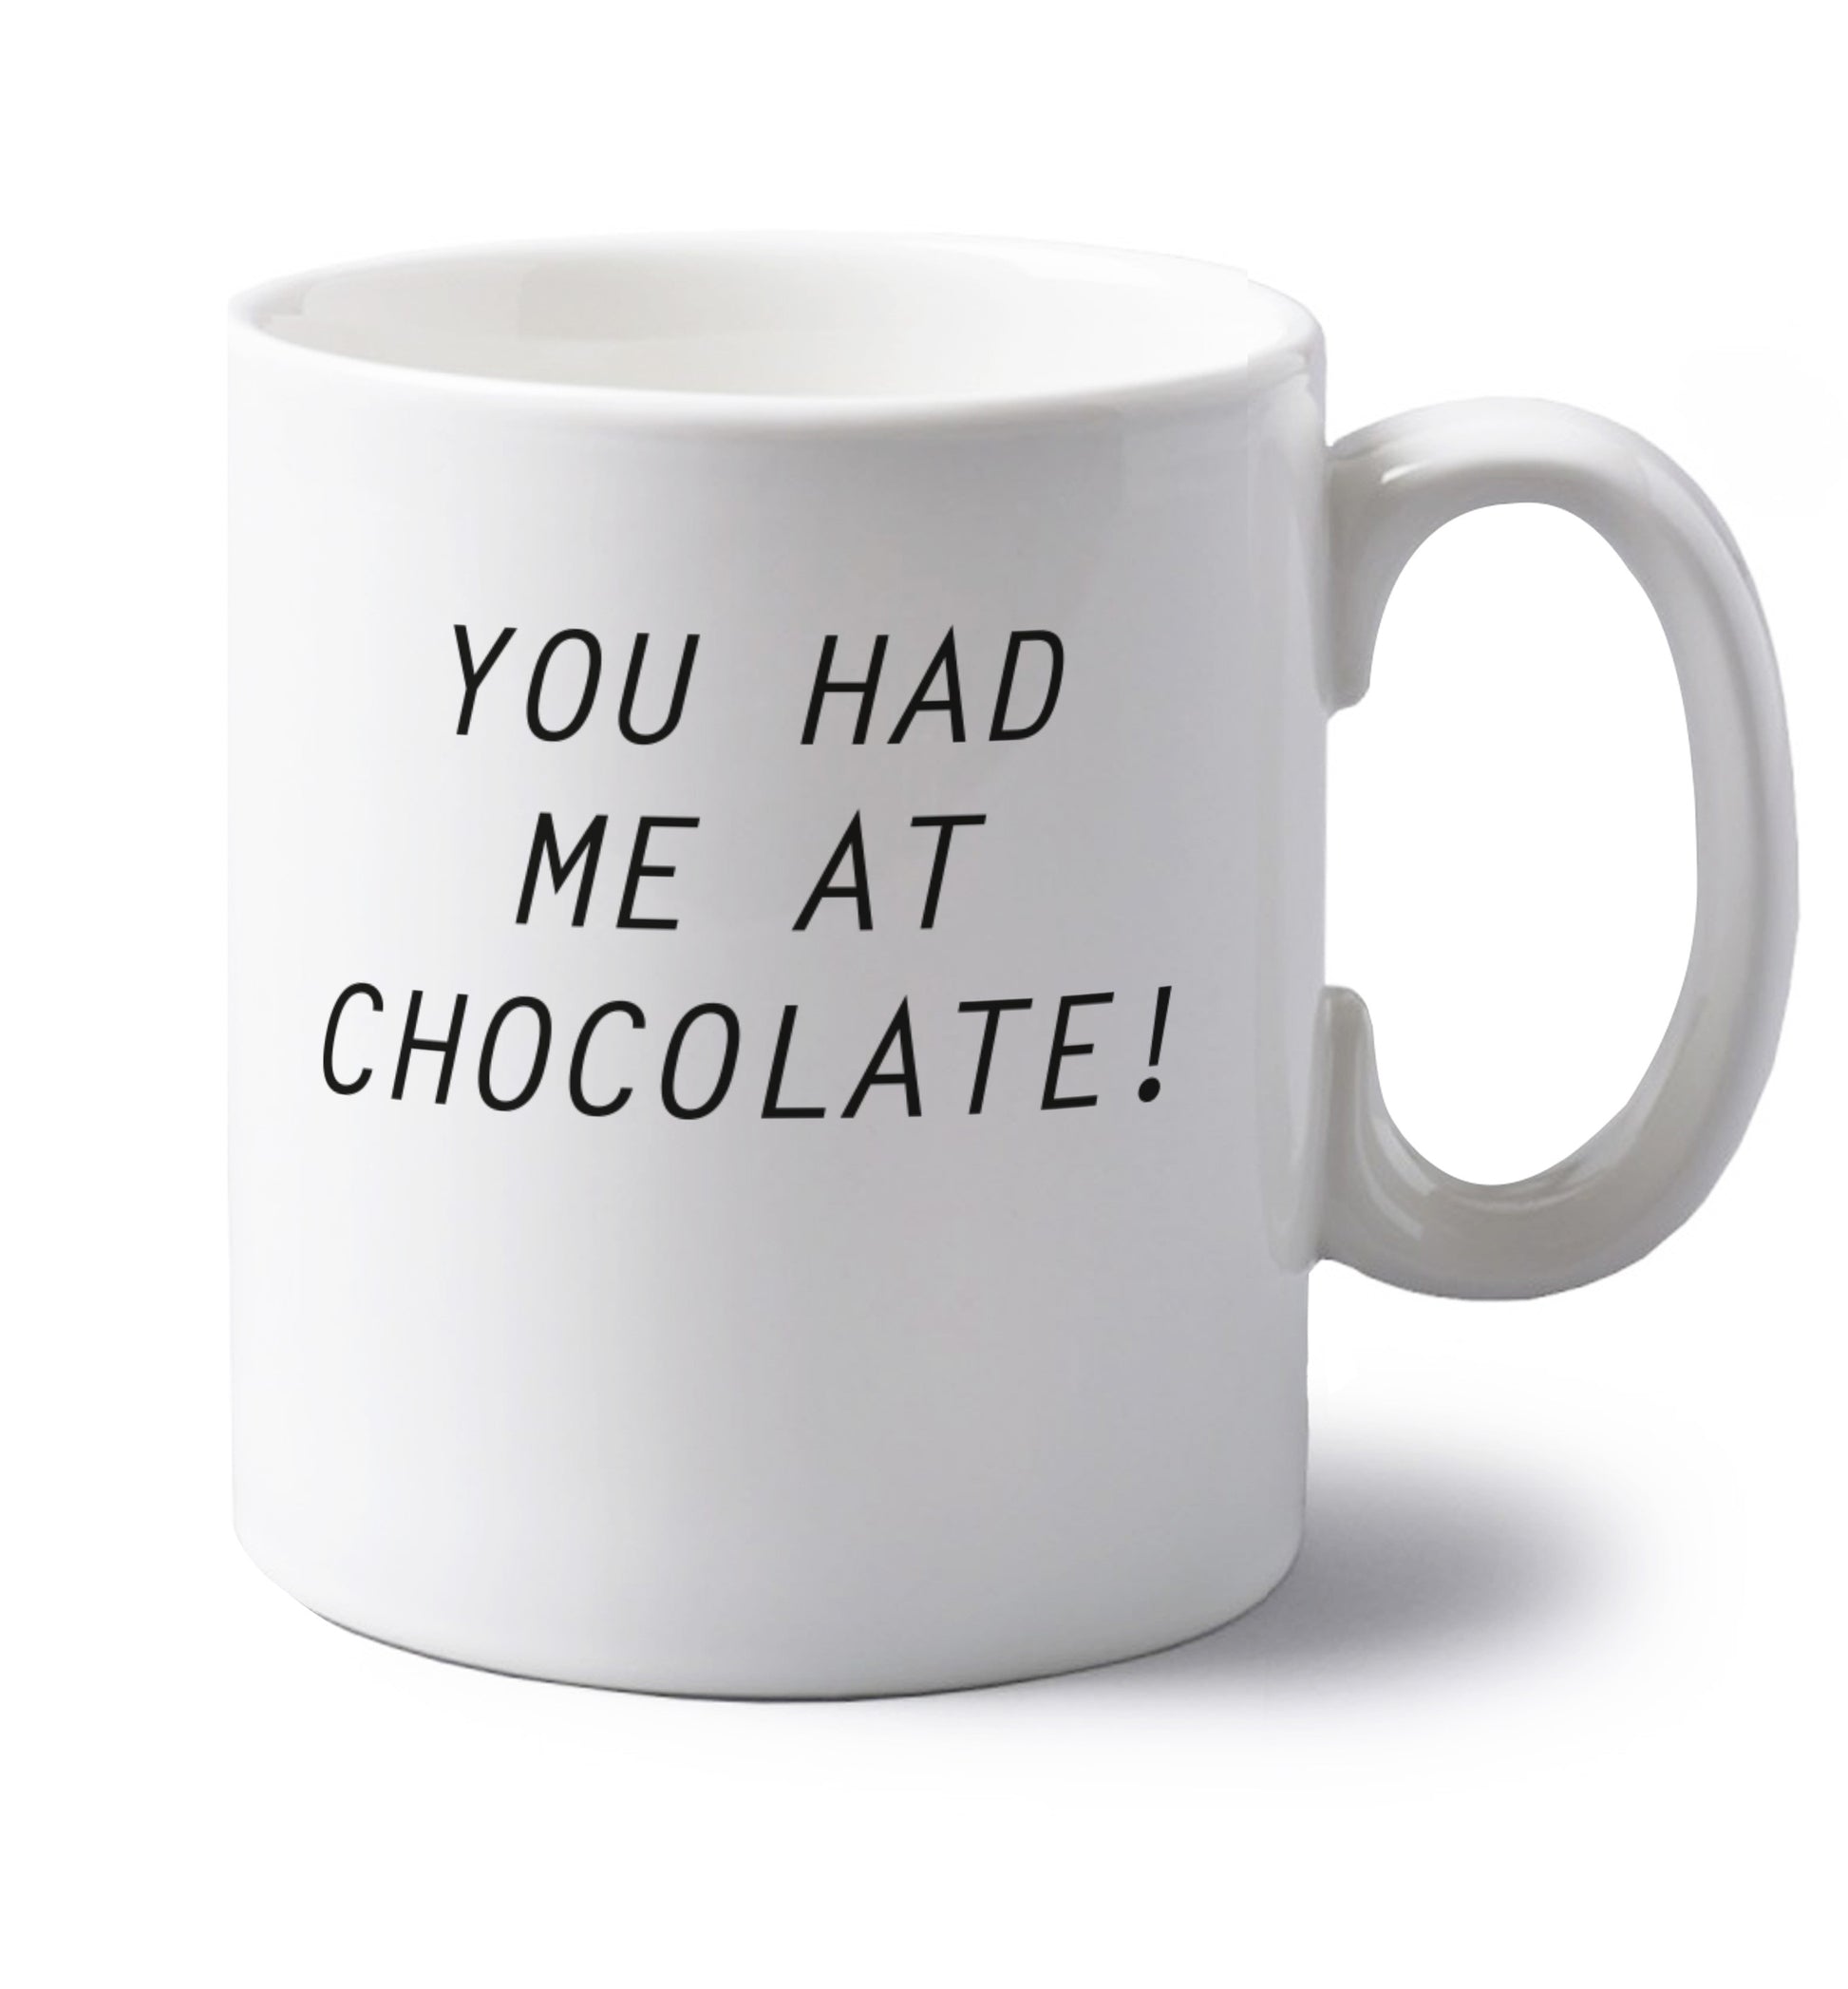 You had me at chocolate left handed white ceramic mug 